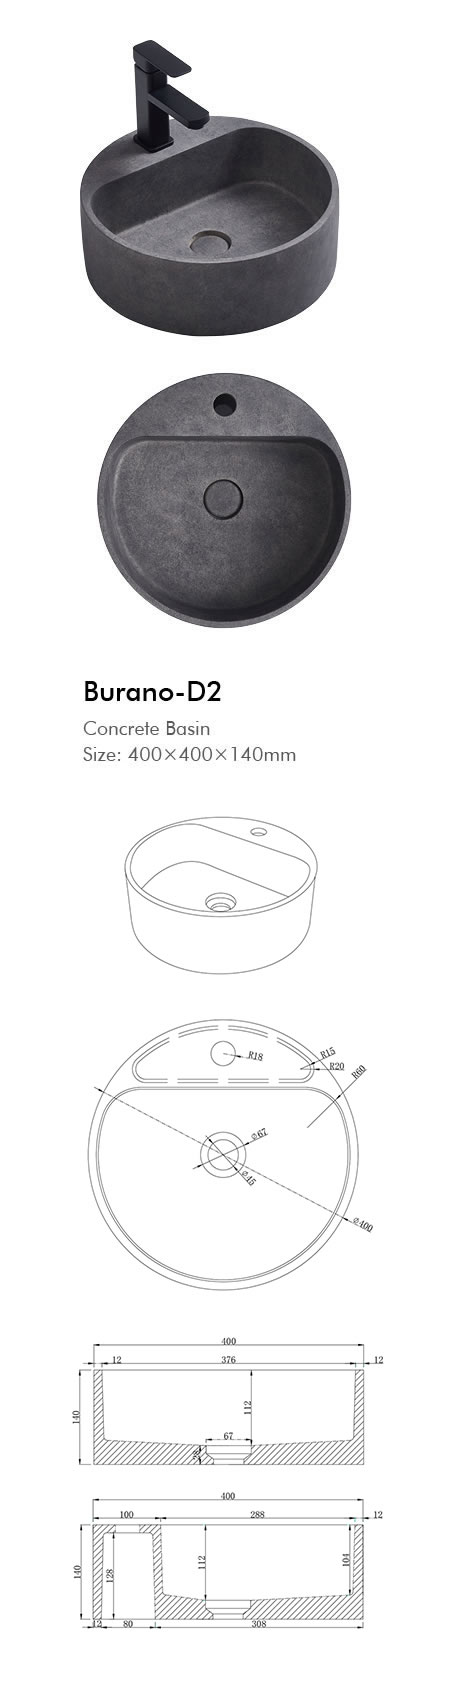 Burano-D2